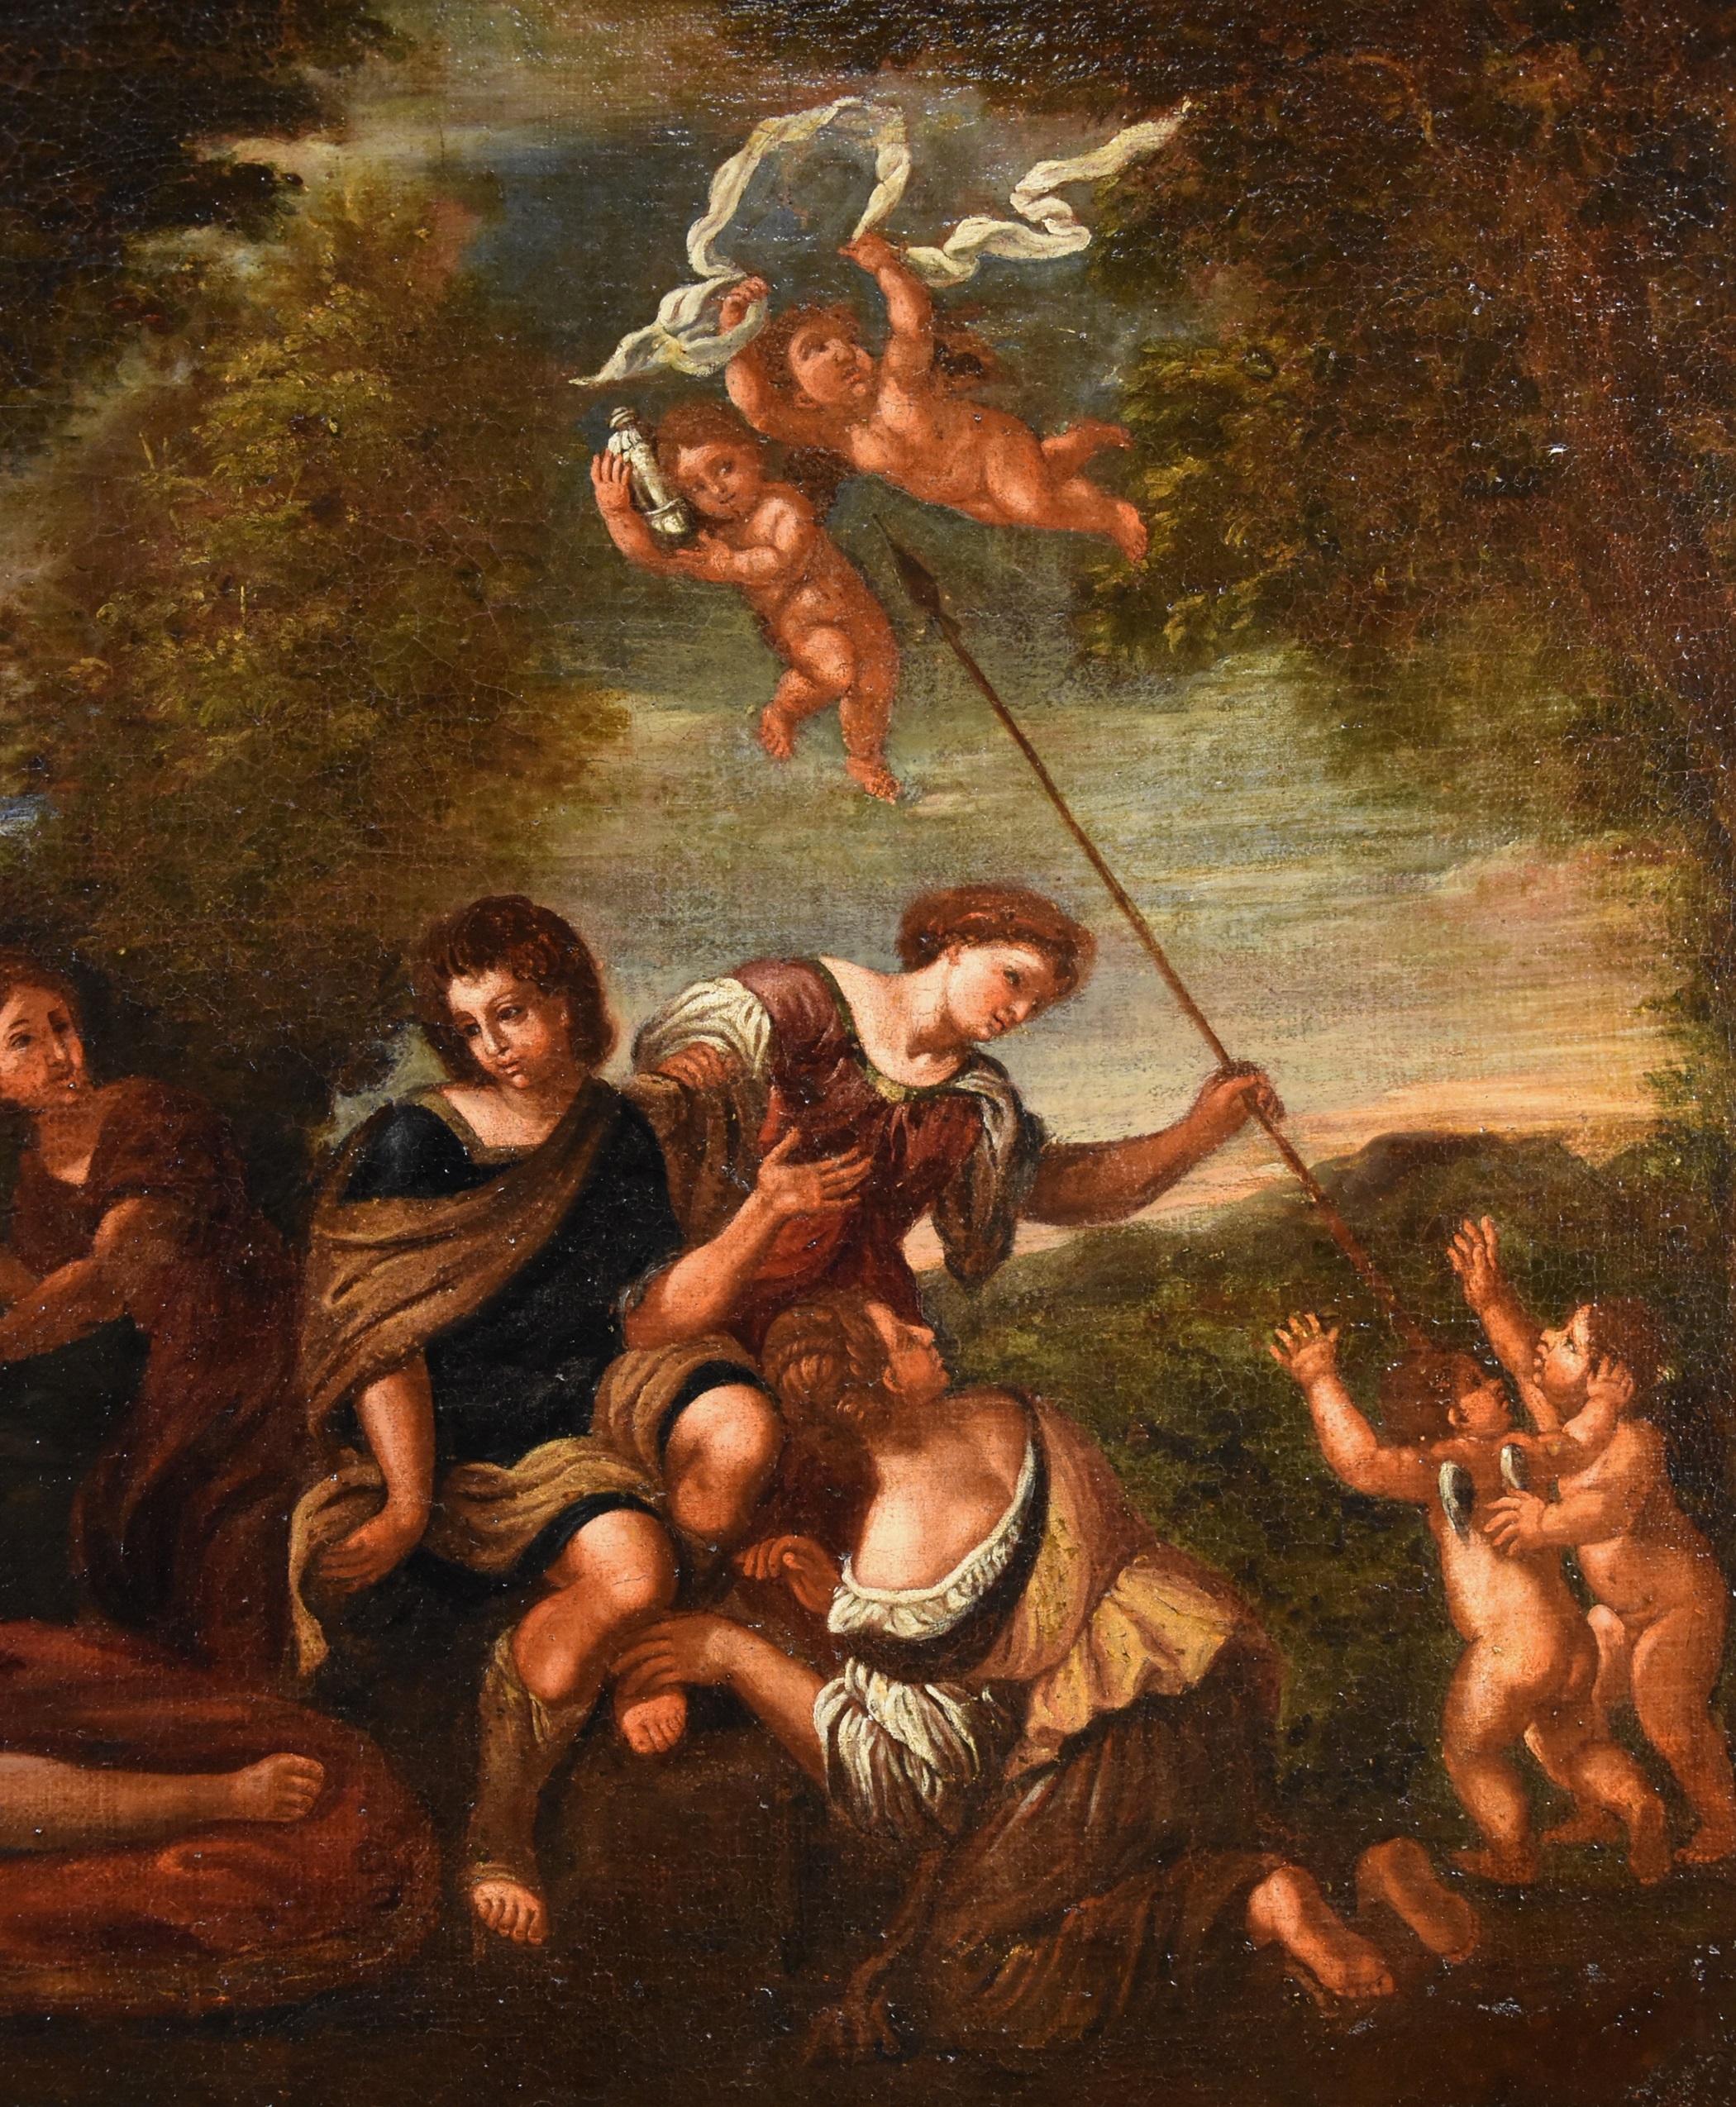 Diana Albani Mythological Paint Oil on canvas 17th Century Old master Italy Art 4